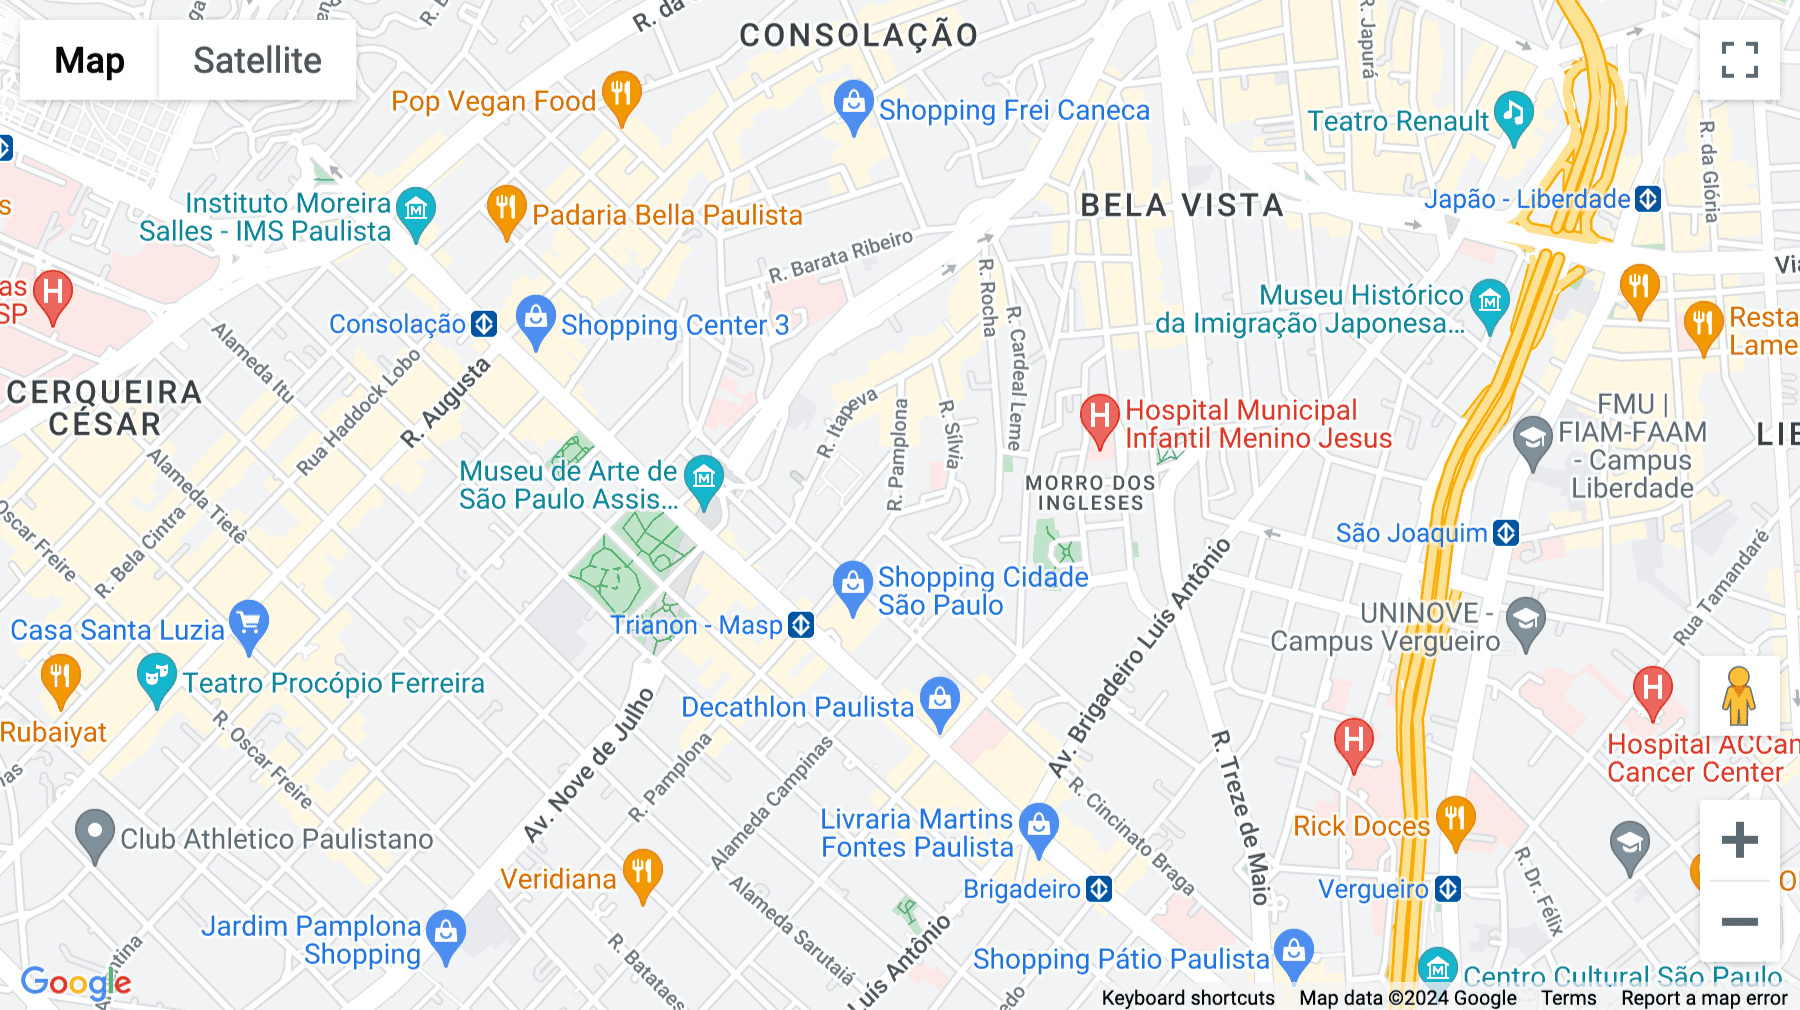 Click for interative map of Rua Pamplona, 287, Bela Vista, Sao Paulo